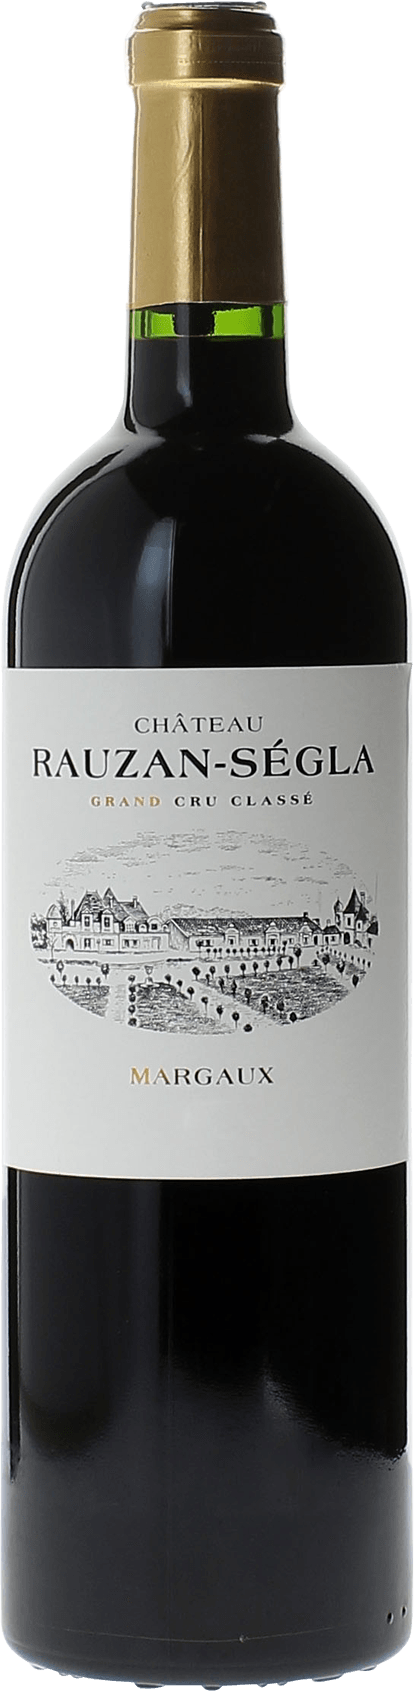 Rauzan-segla 2007 2me Grand cru class Margaux, Bordeaux rouge